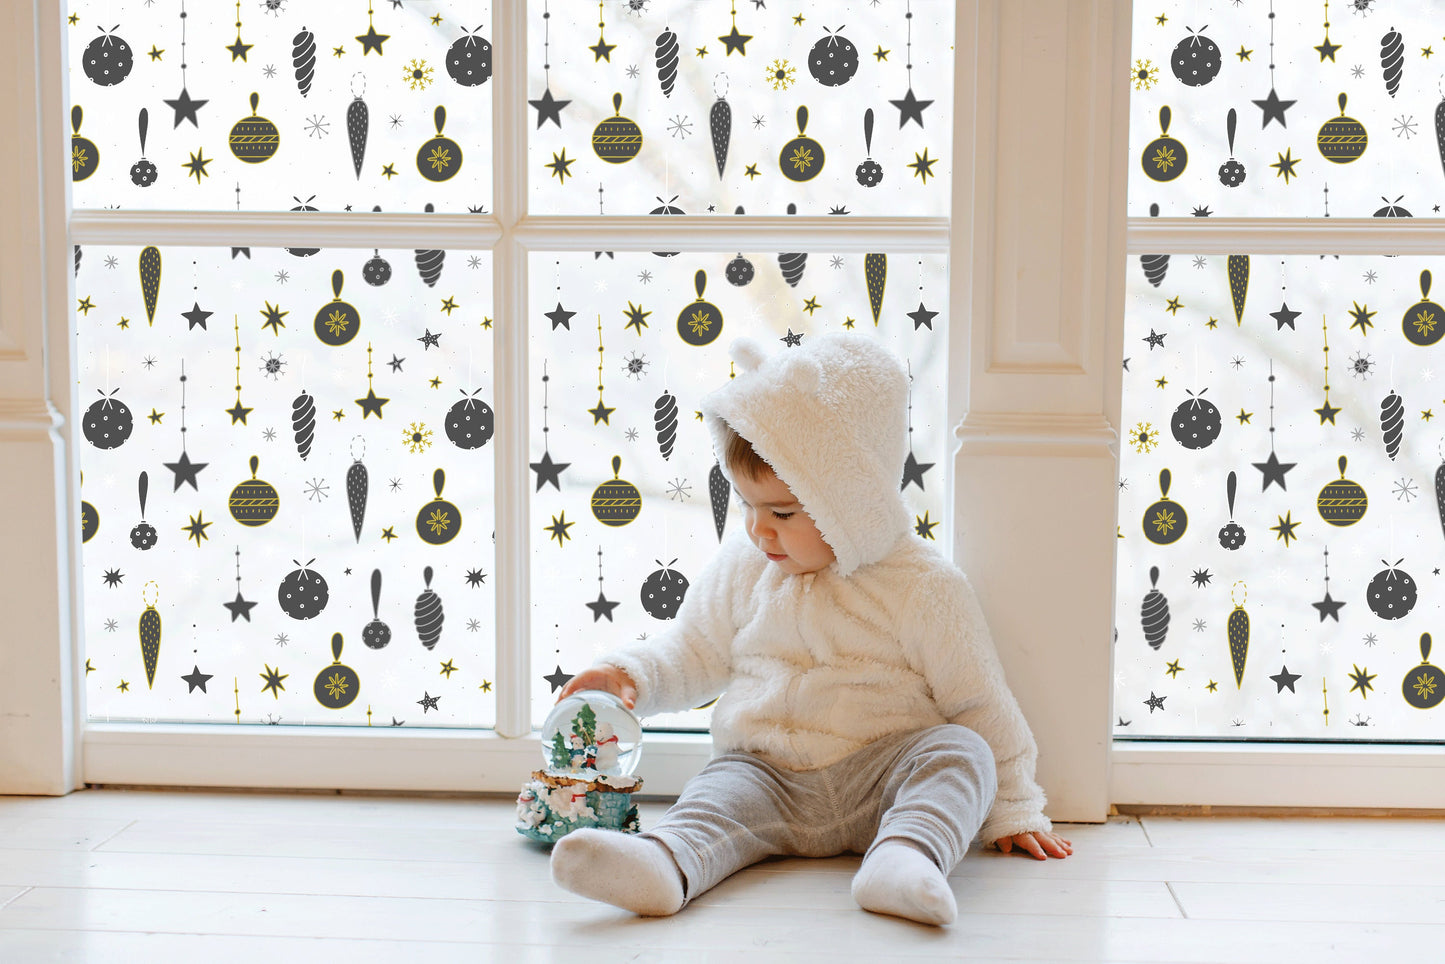 Christmas Baubles Decorative Window Stickers Film Window Privacy Film, Xmas Decorations Holiday Festive